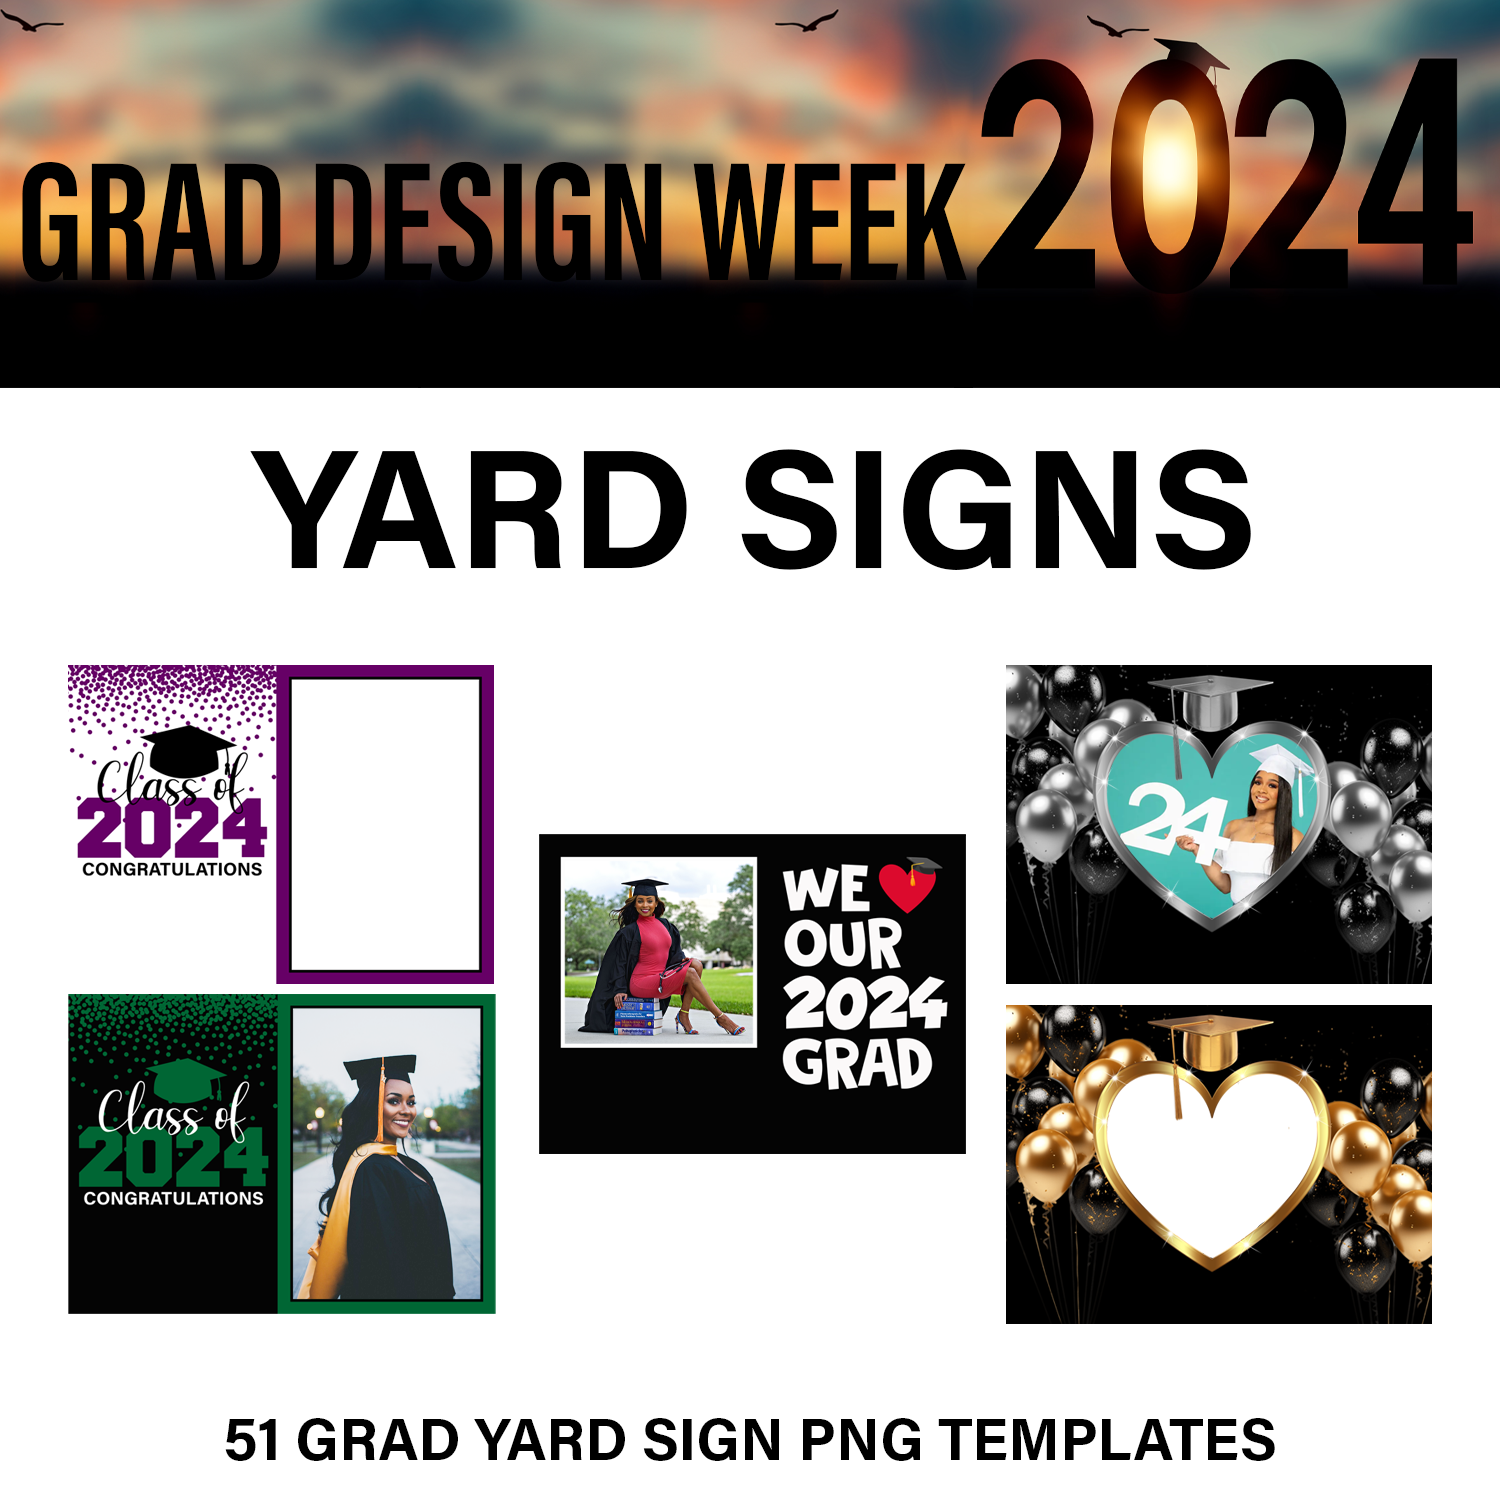 Grad Design Week 2024 Yard Signs